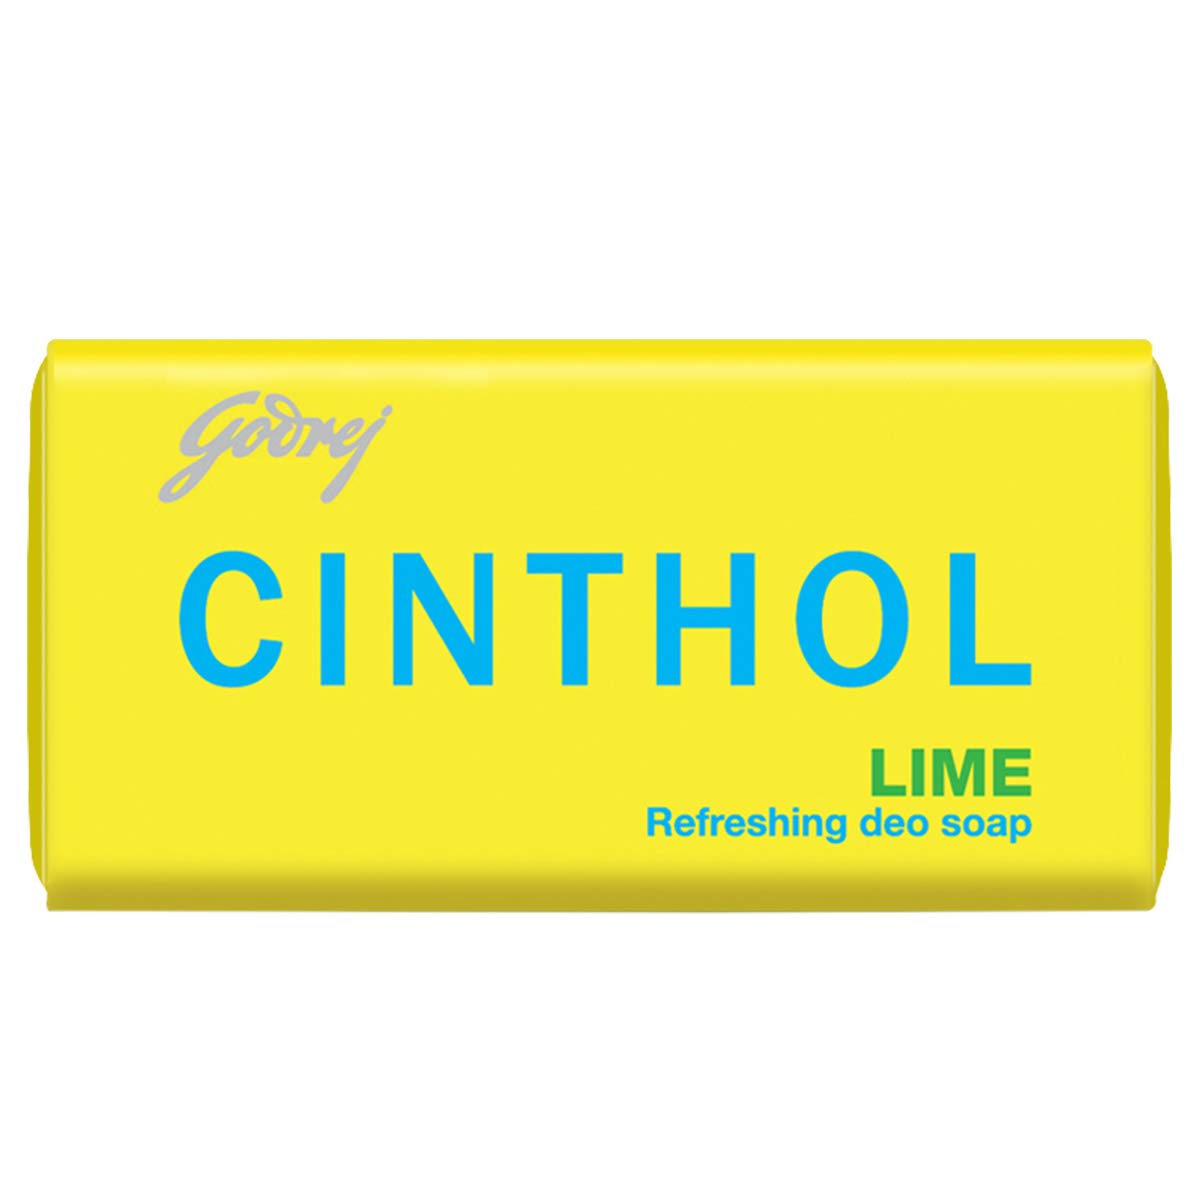 Cinthol Lime Deo Soap